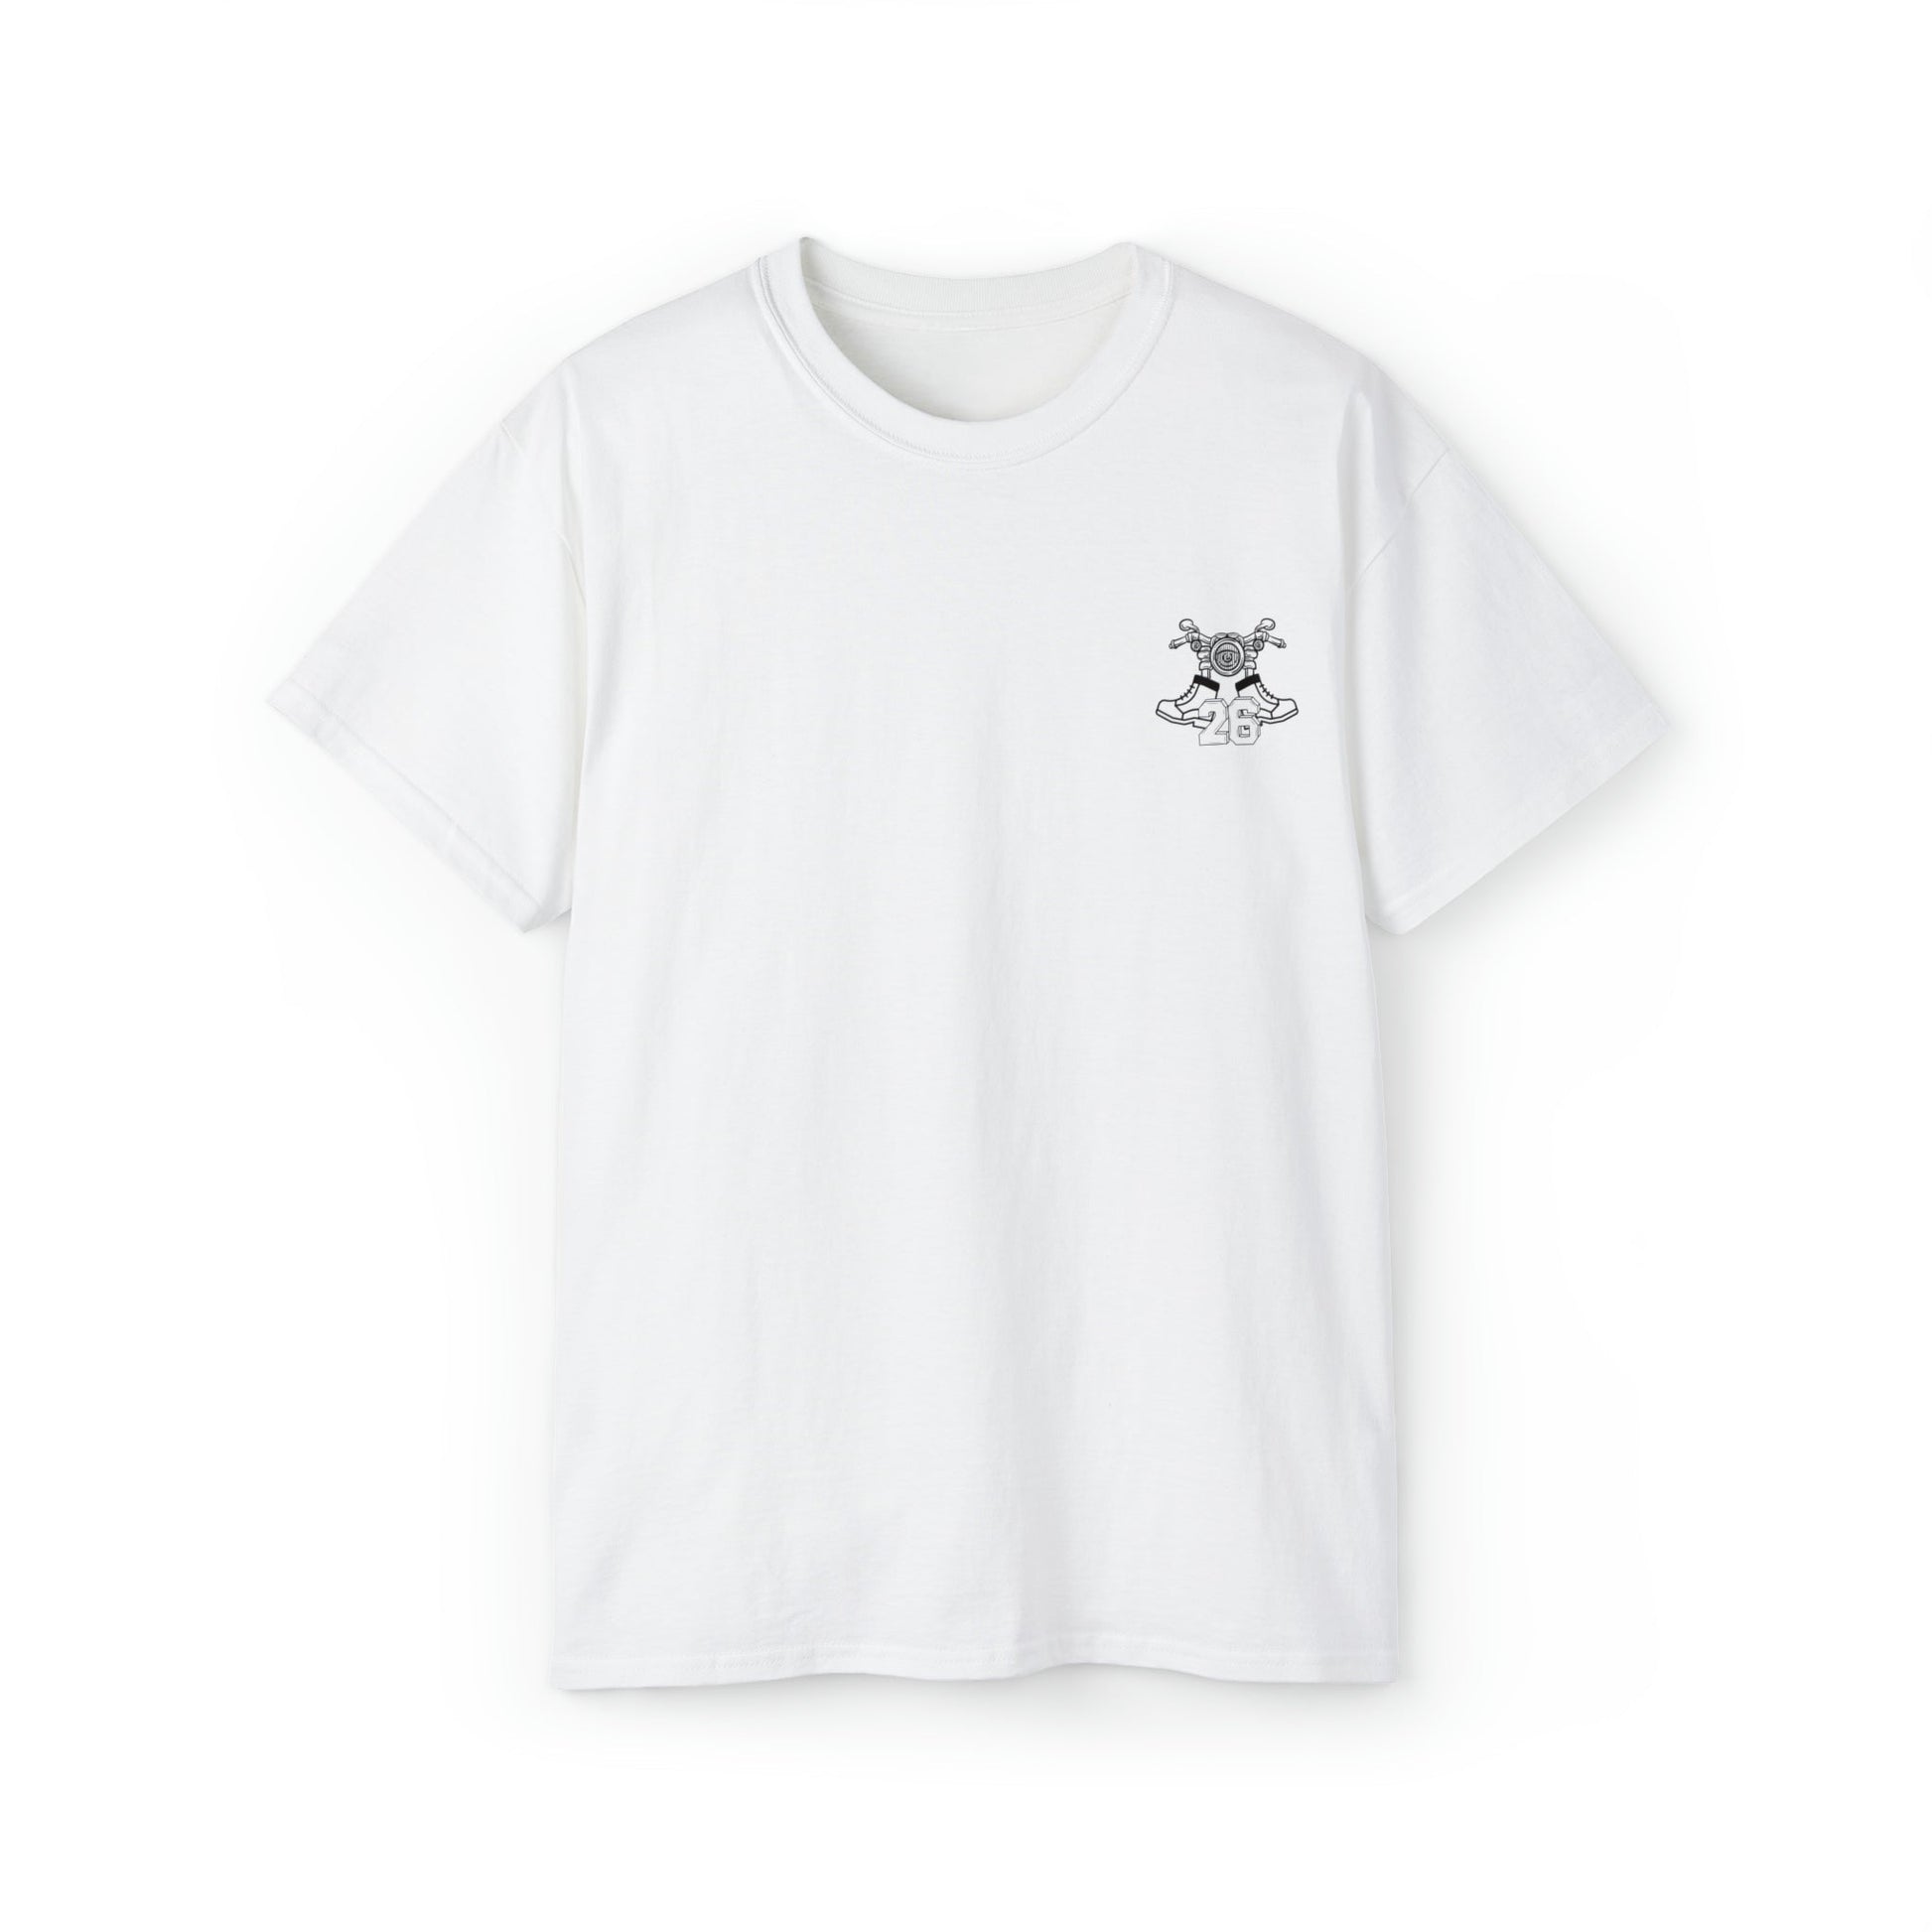 【Unisex】【揸得太快】T-Shirt 孖轆原創 - 孖轆雜貨鋪 #皮包鐵# #電單車26#